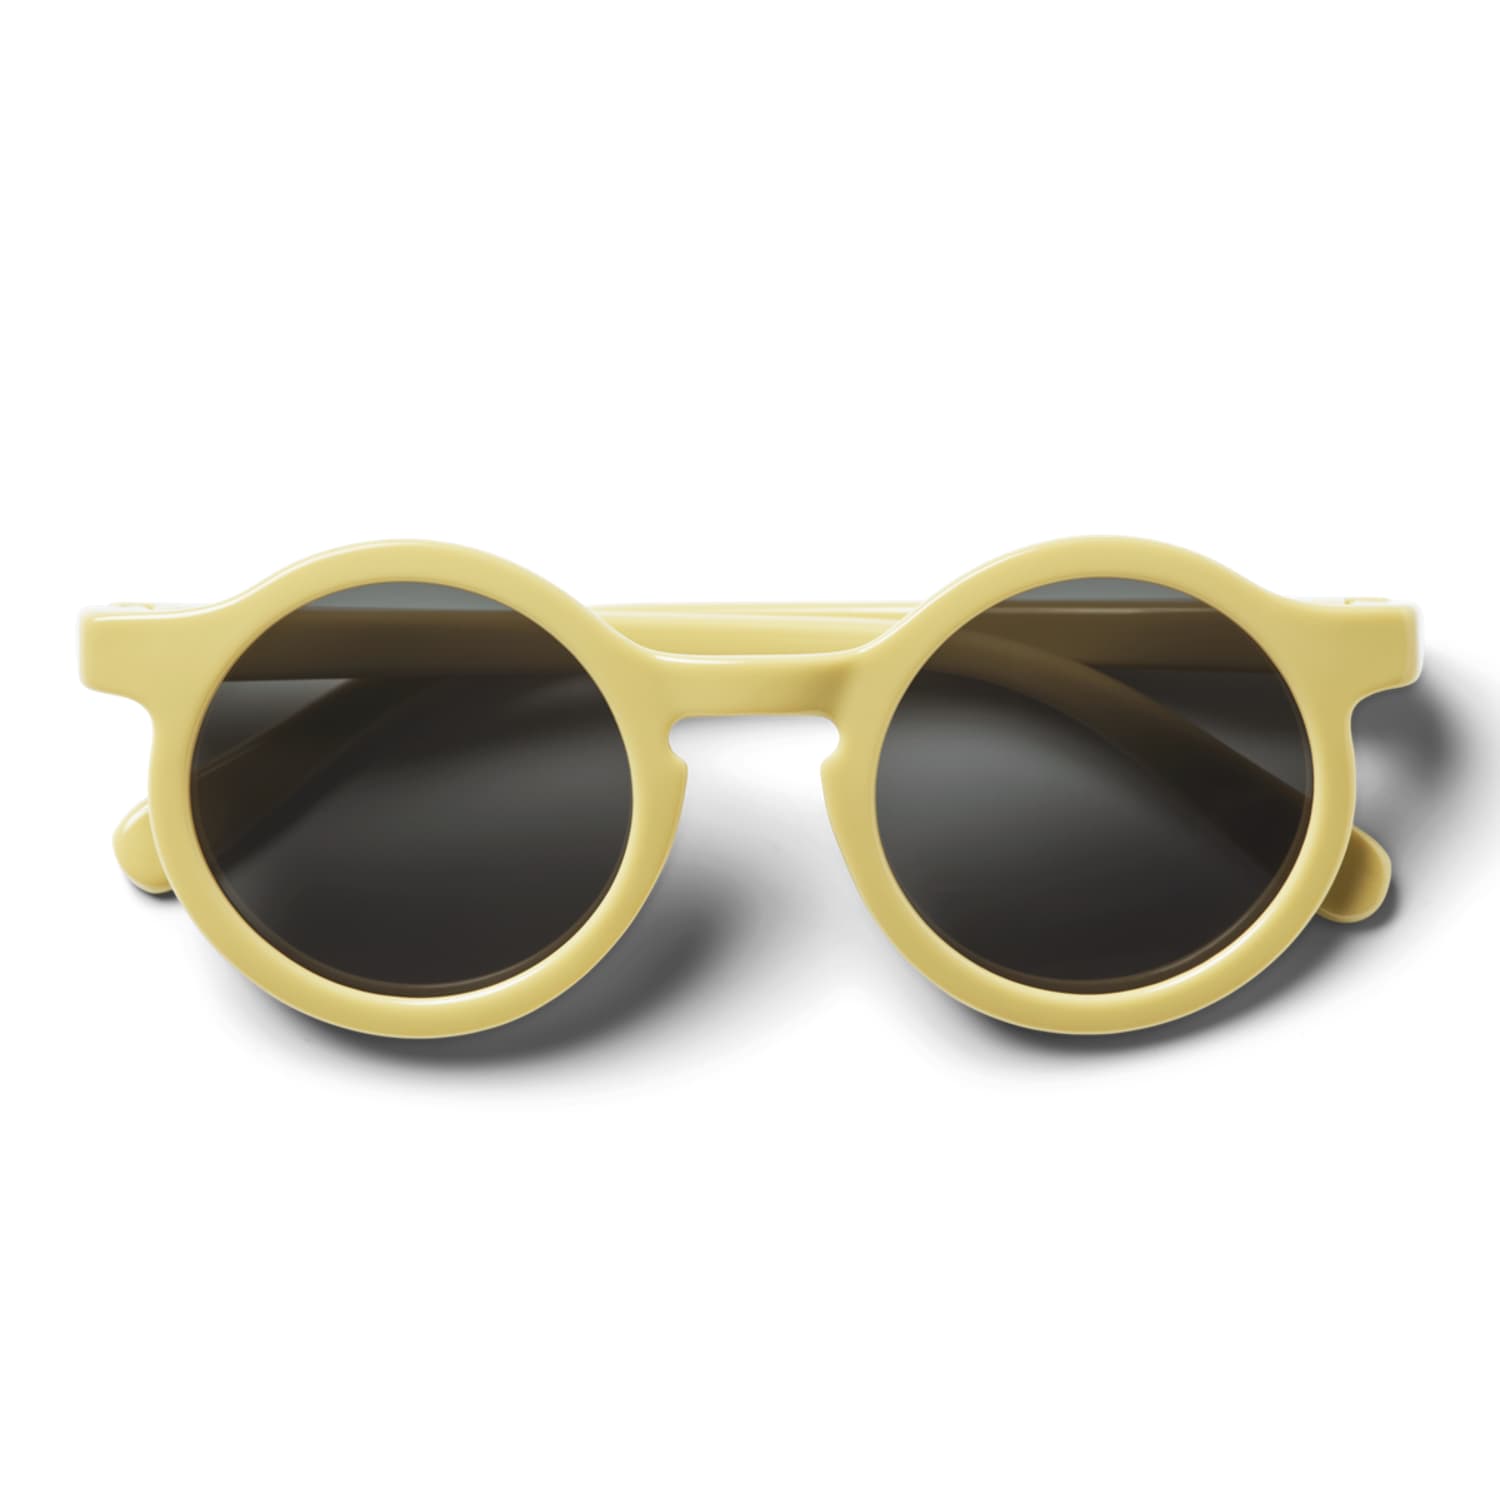 Darla Sunglasses 1-3 Years (Crispy Corn)